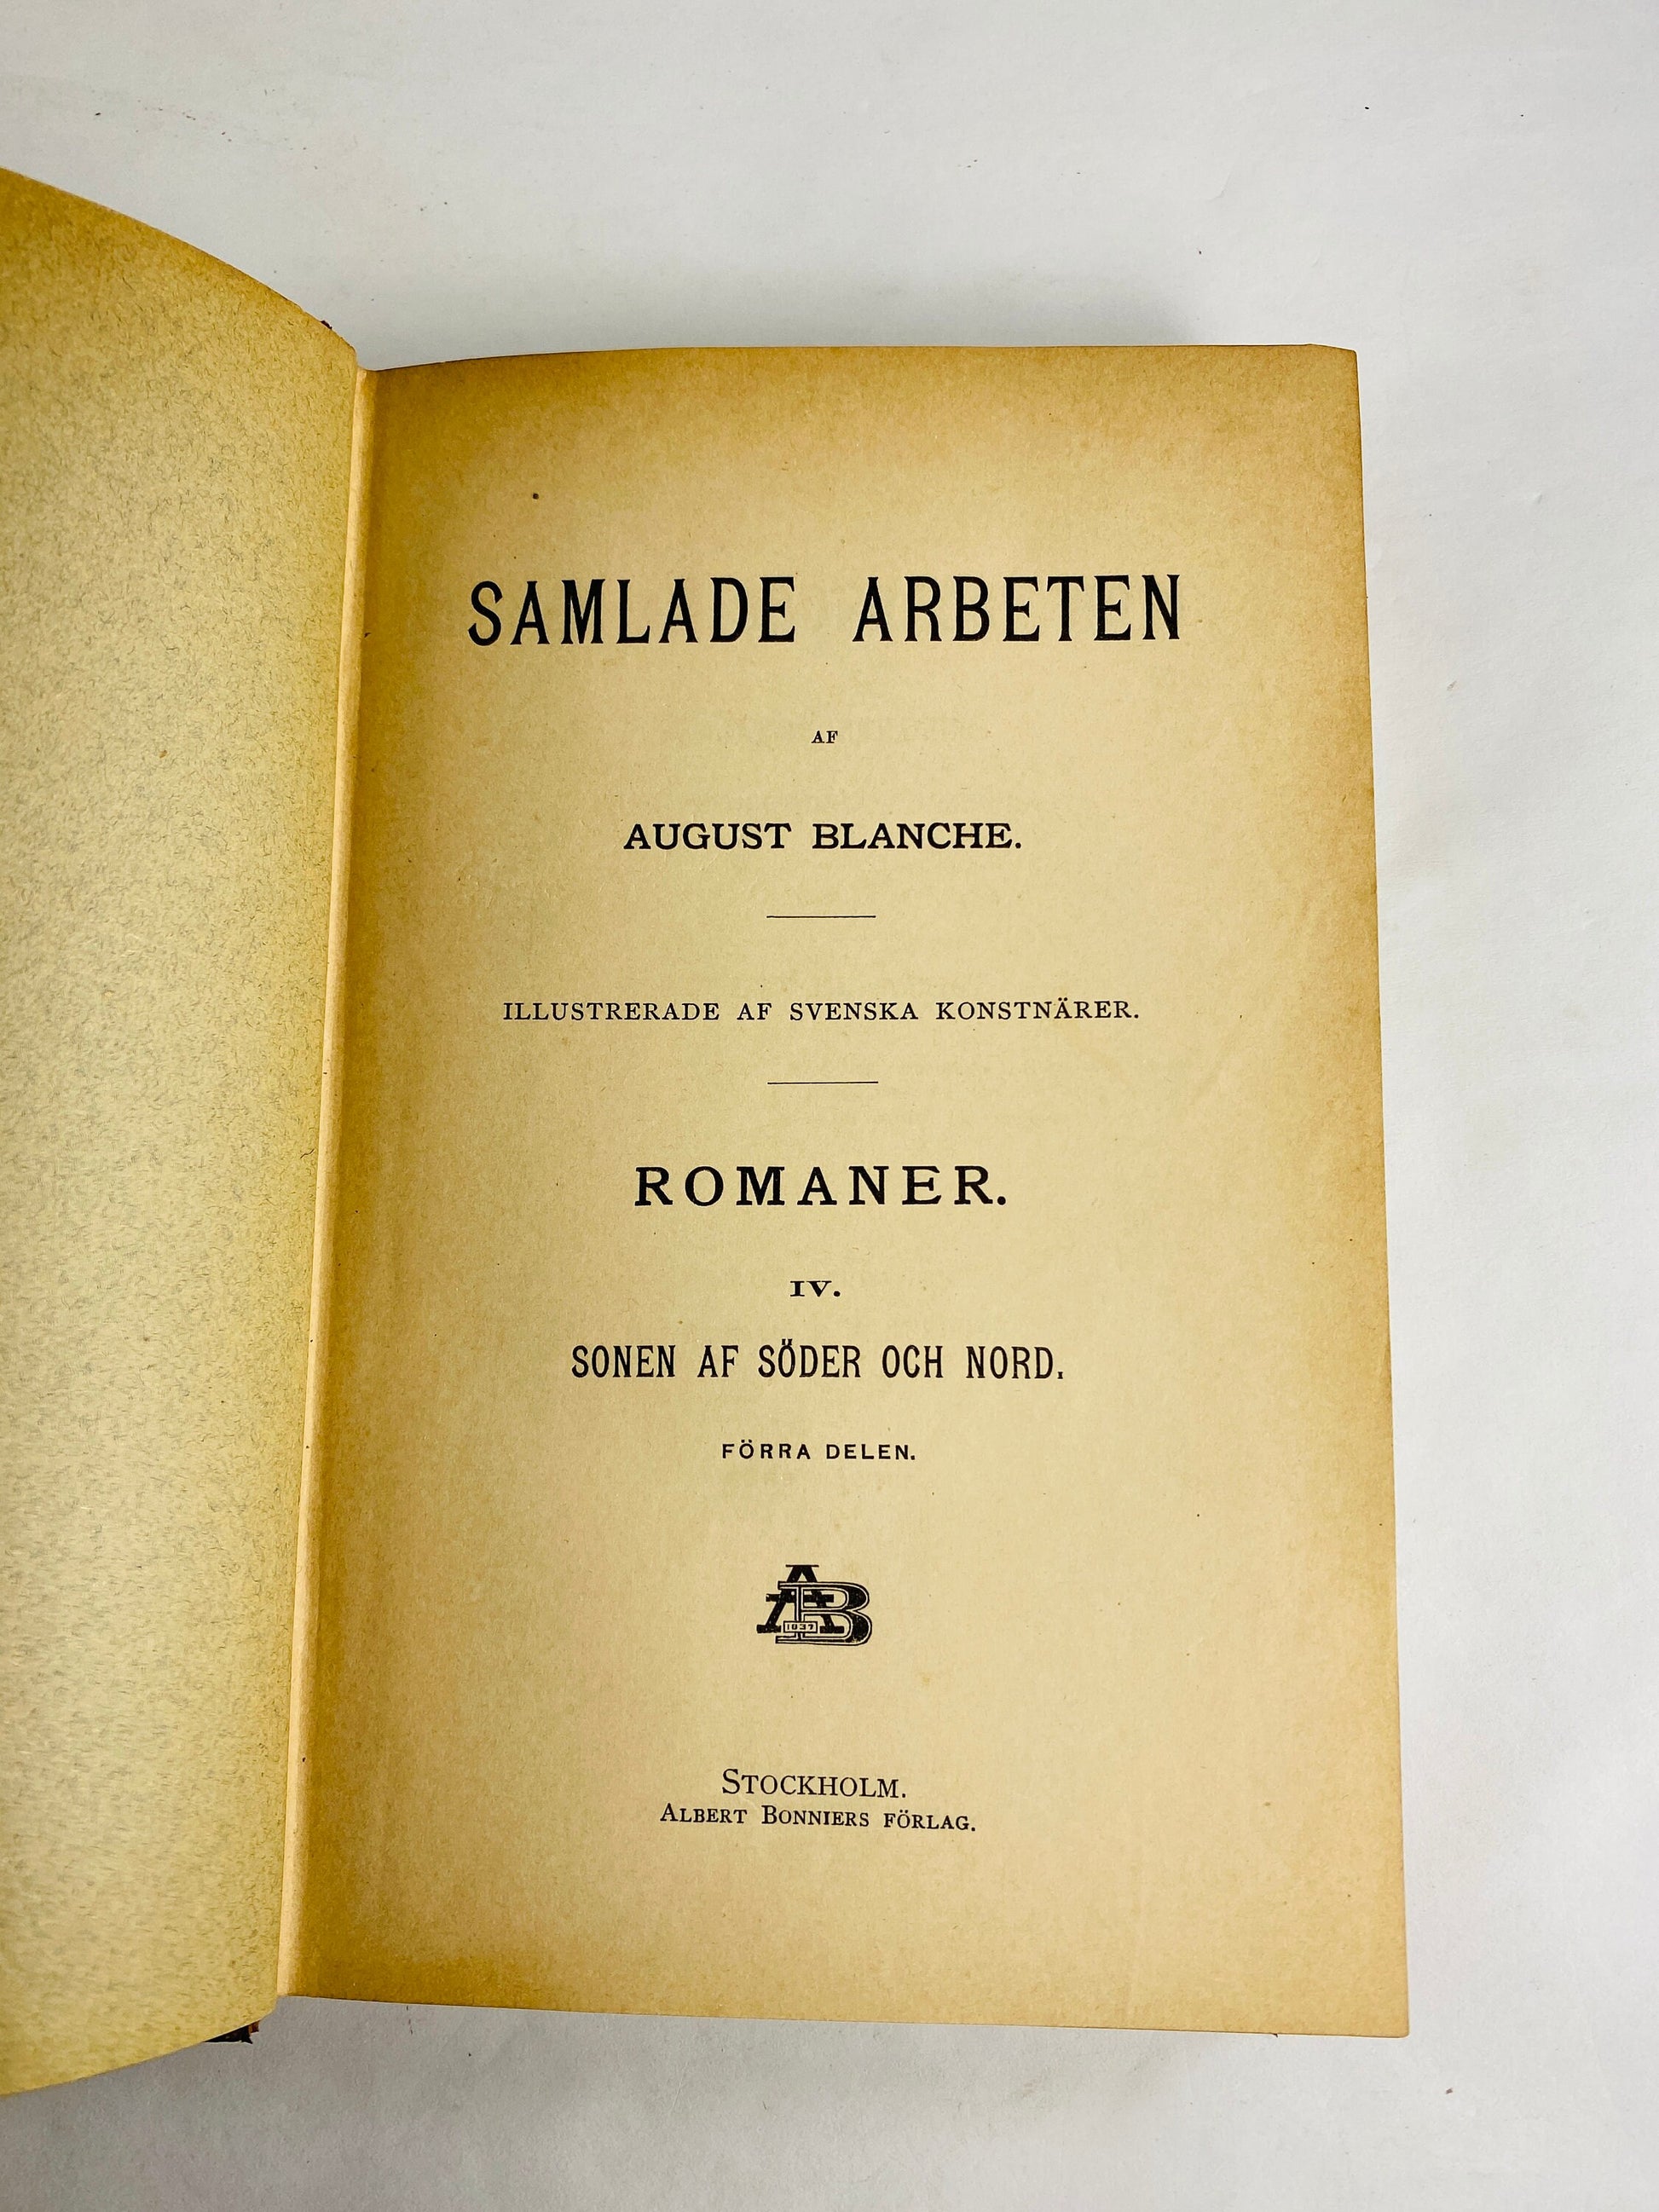 GORGEOUS vintage Swedish book by August Blanche Albert Bonniers Forlag volume IV Samlade arbeten circa 1891 Stunning antique bookshelf decor